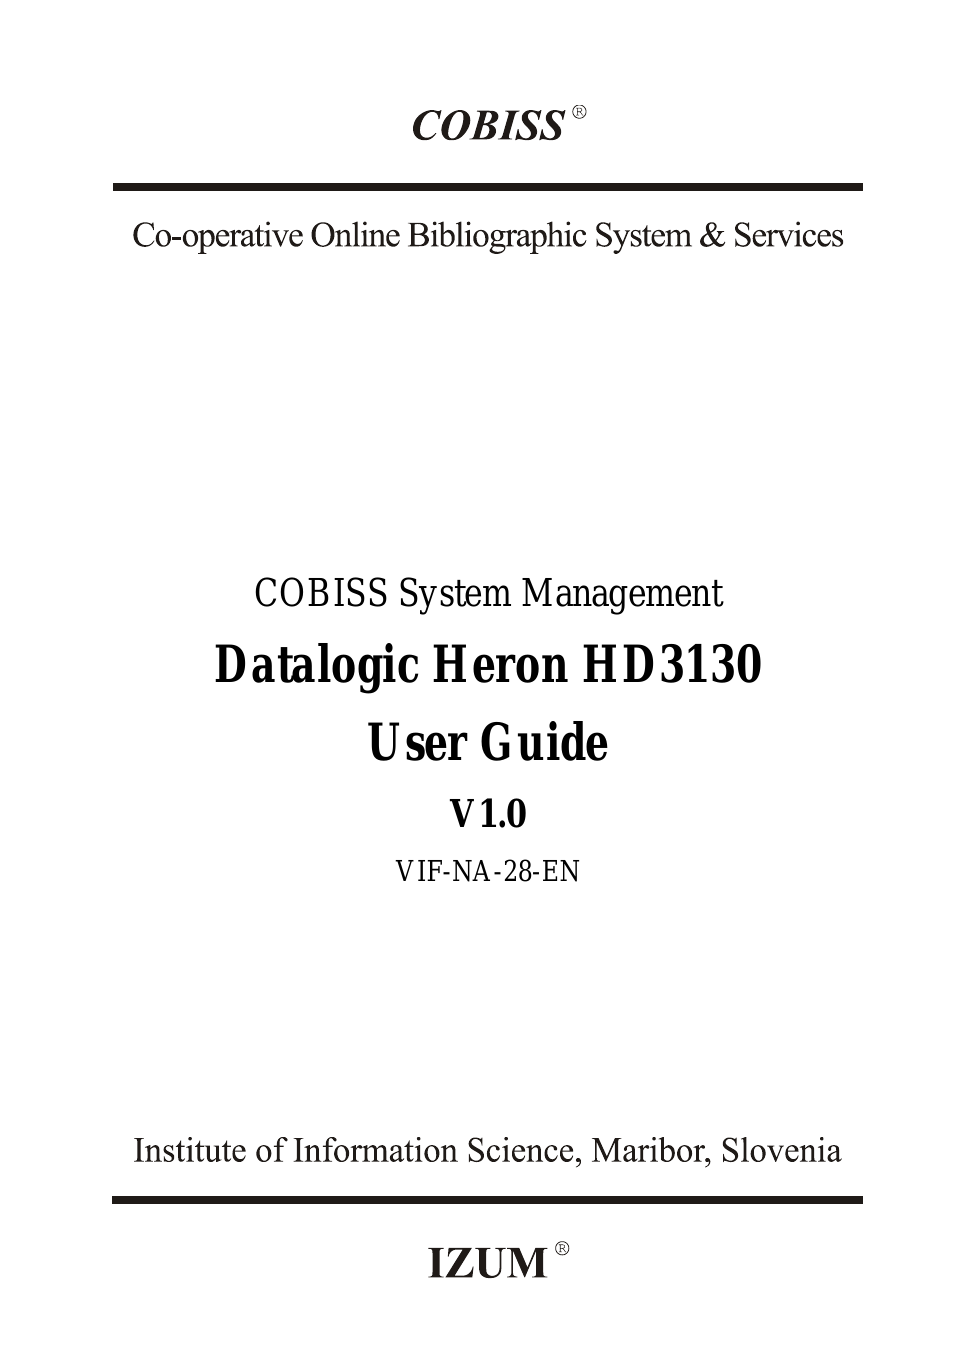 Heron HD3100